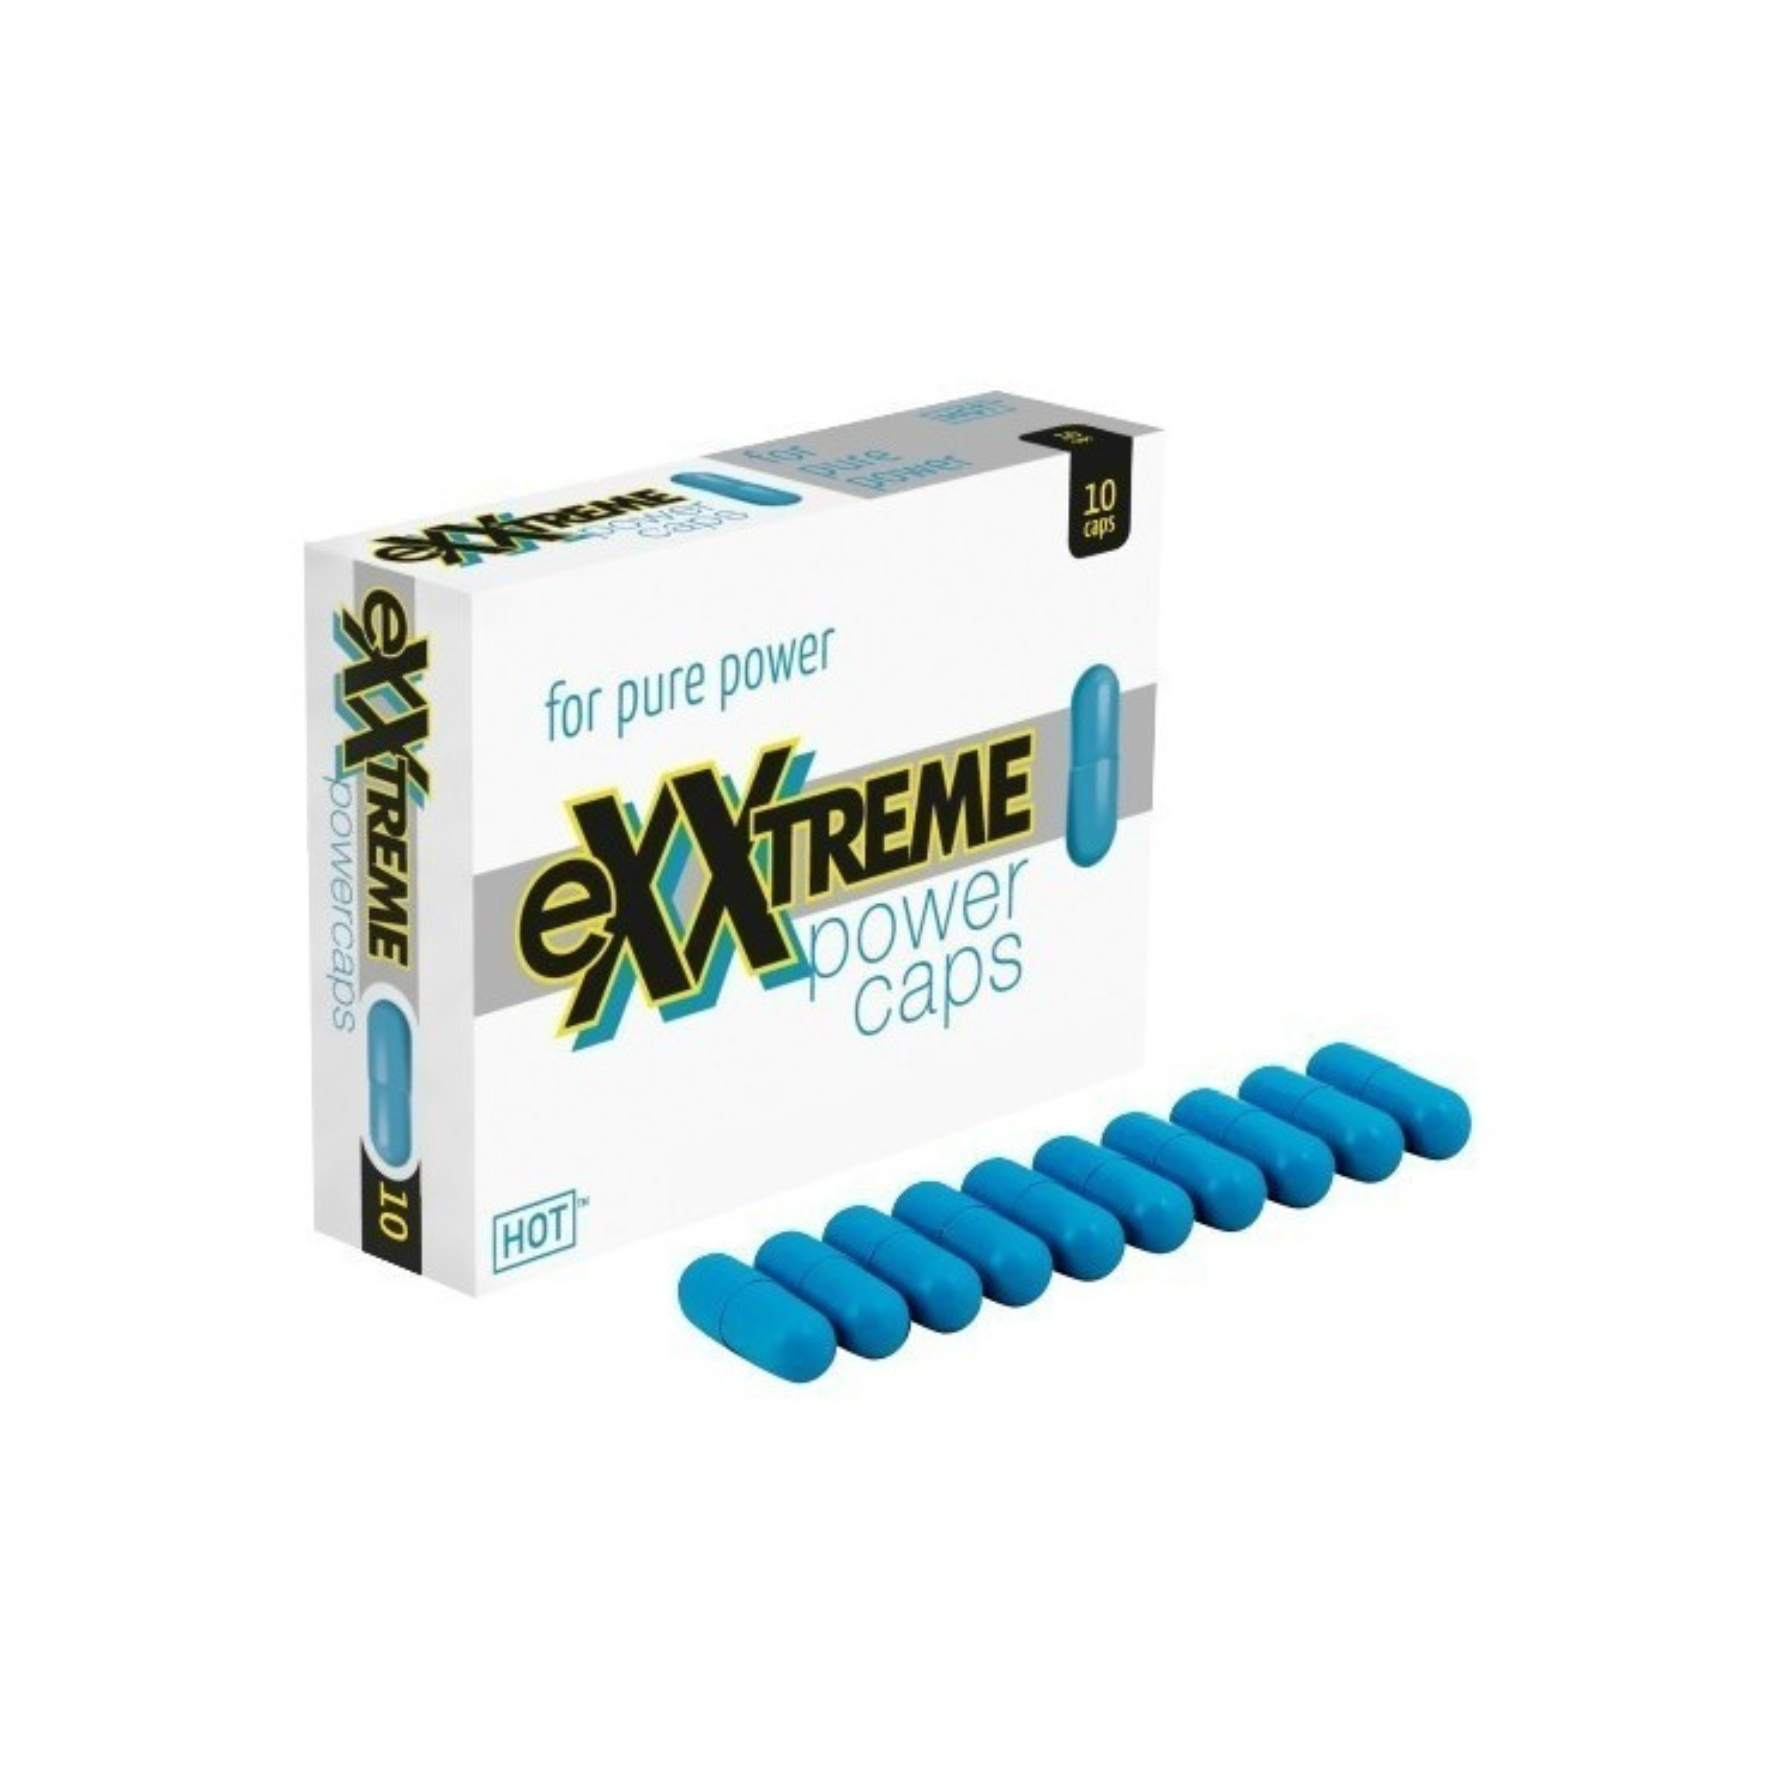 Maisto papildas seksualinei energijai  “Hot Exxtreme Power Caps” - 10 vnt.